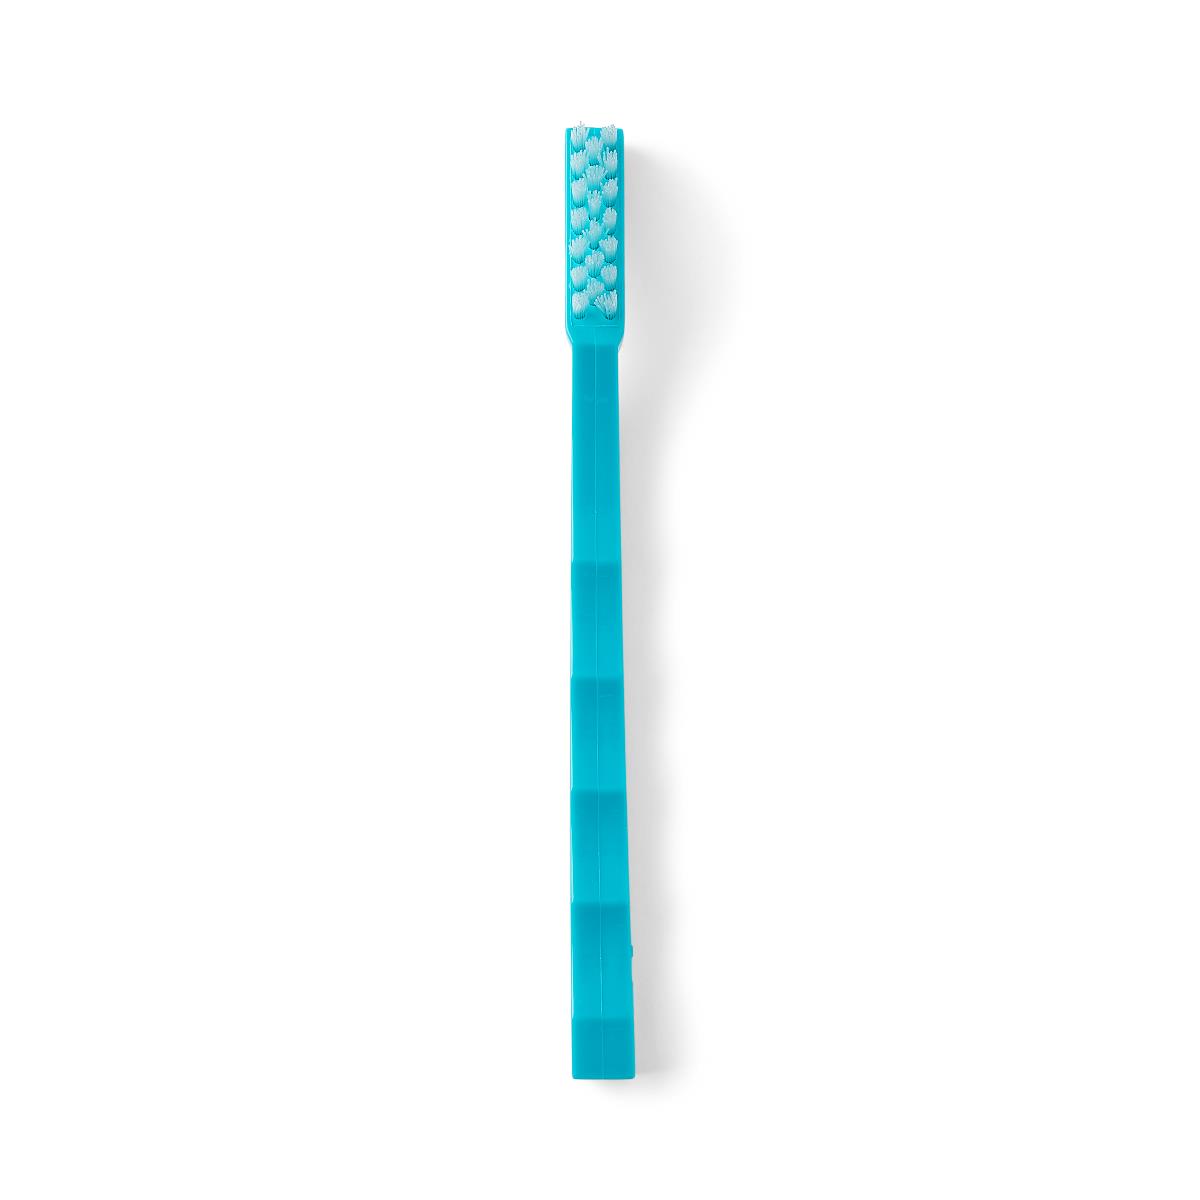 Toothbrush-Style Steel Brushes by Steris | Medline Industries, Inc.